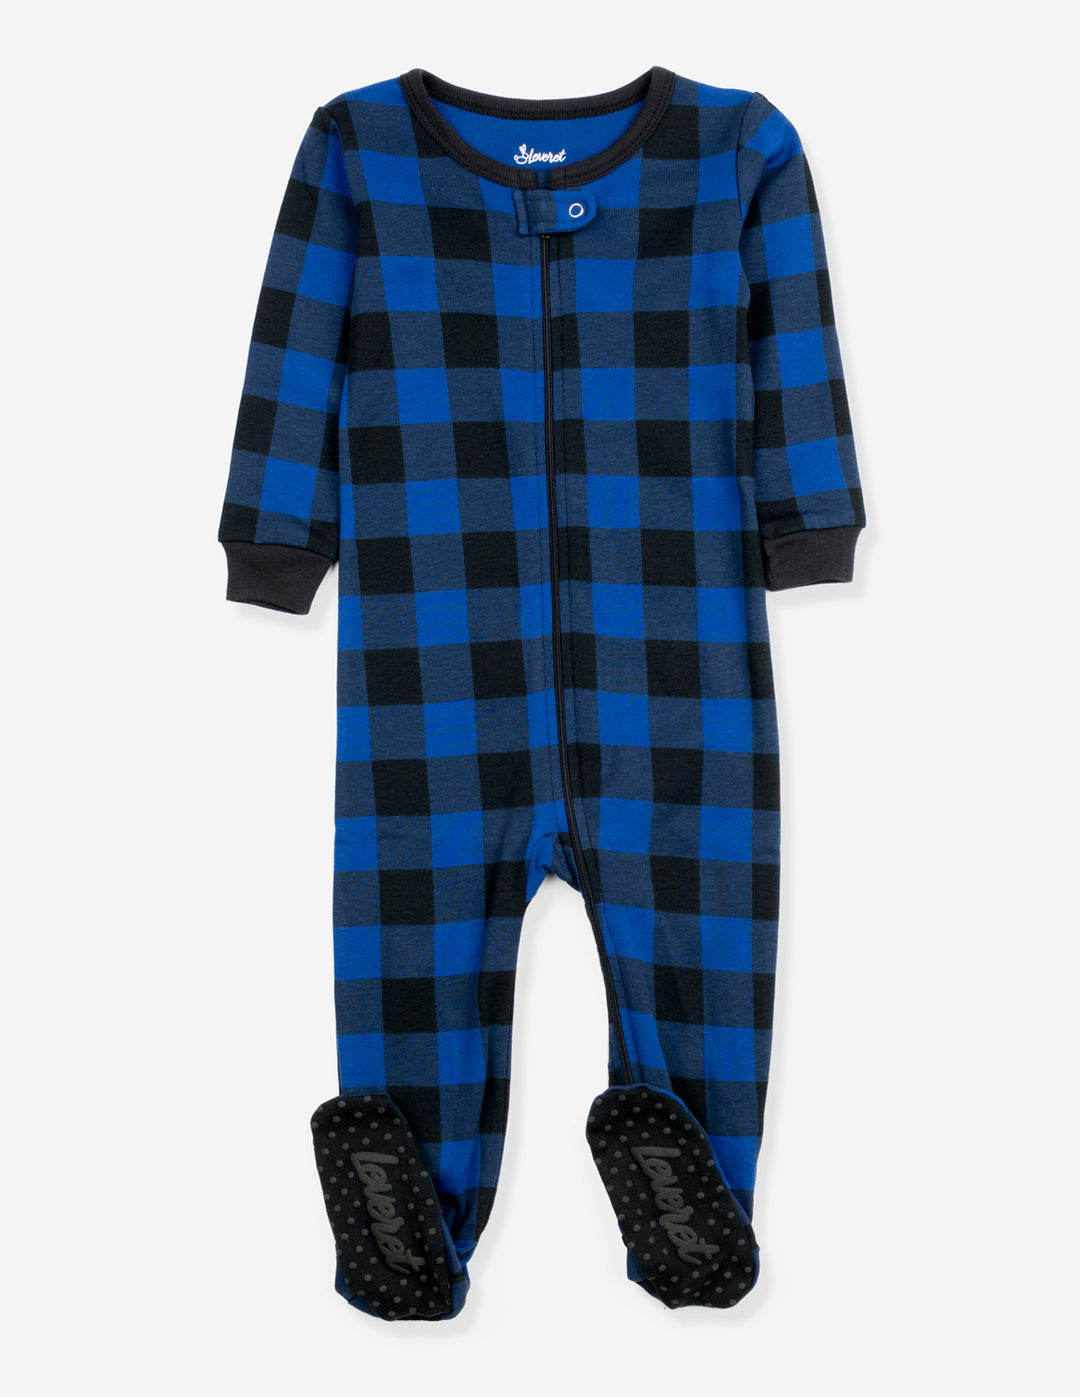 black and navy plaid baby footed pajamas